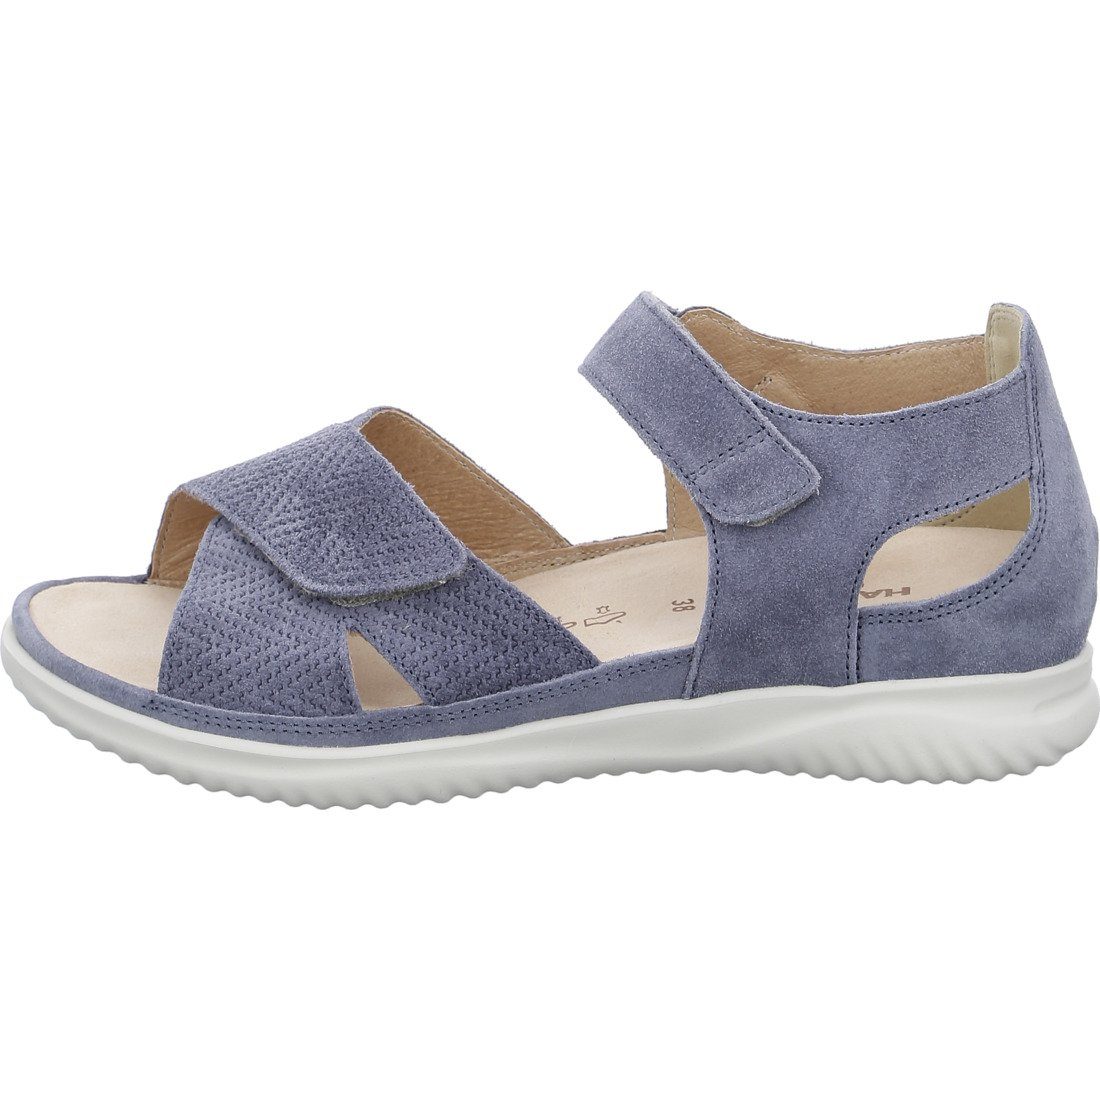 Hartjes Hartjes Sandalette blau Schuhe, 048735 Sandalette Velours - Breeze